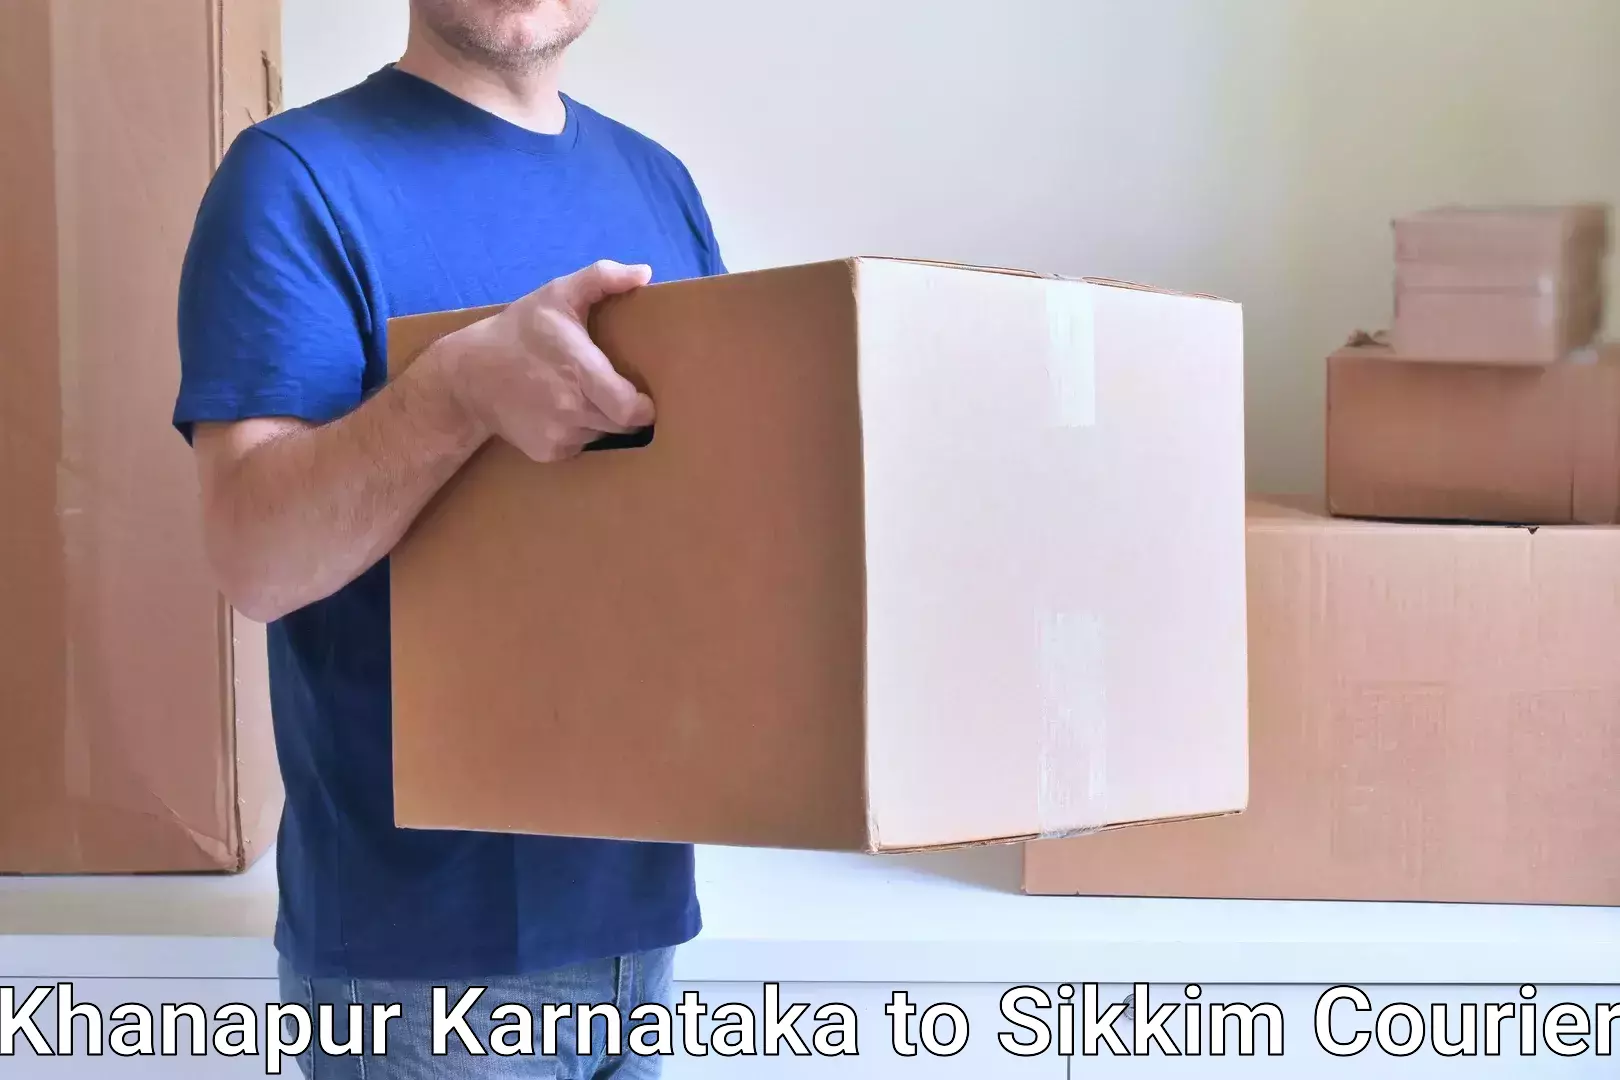 Special handling courier Khanapur Karnataka to Gangtok